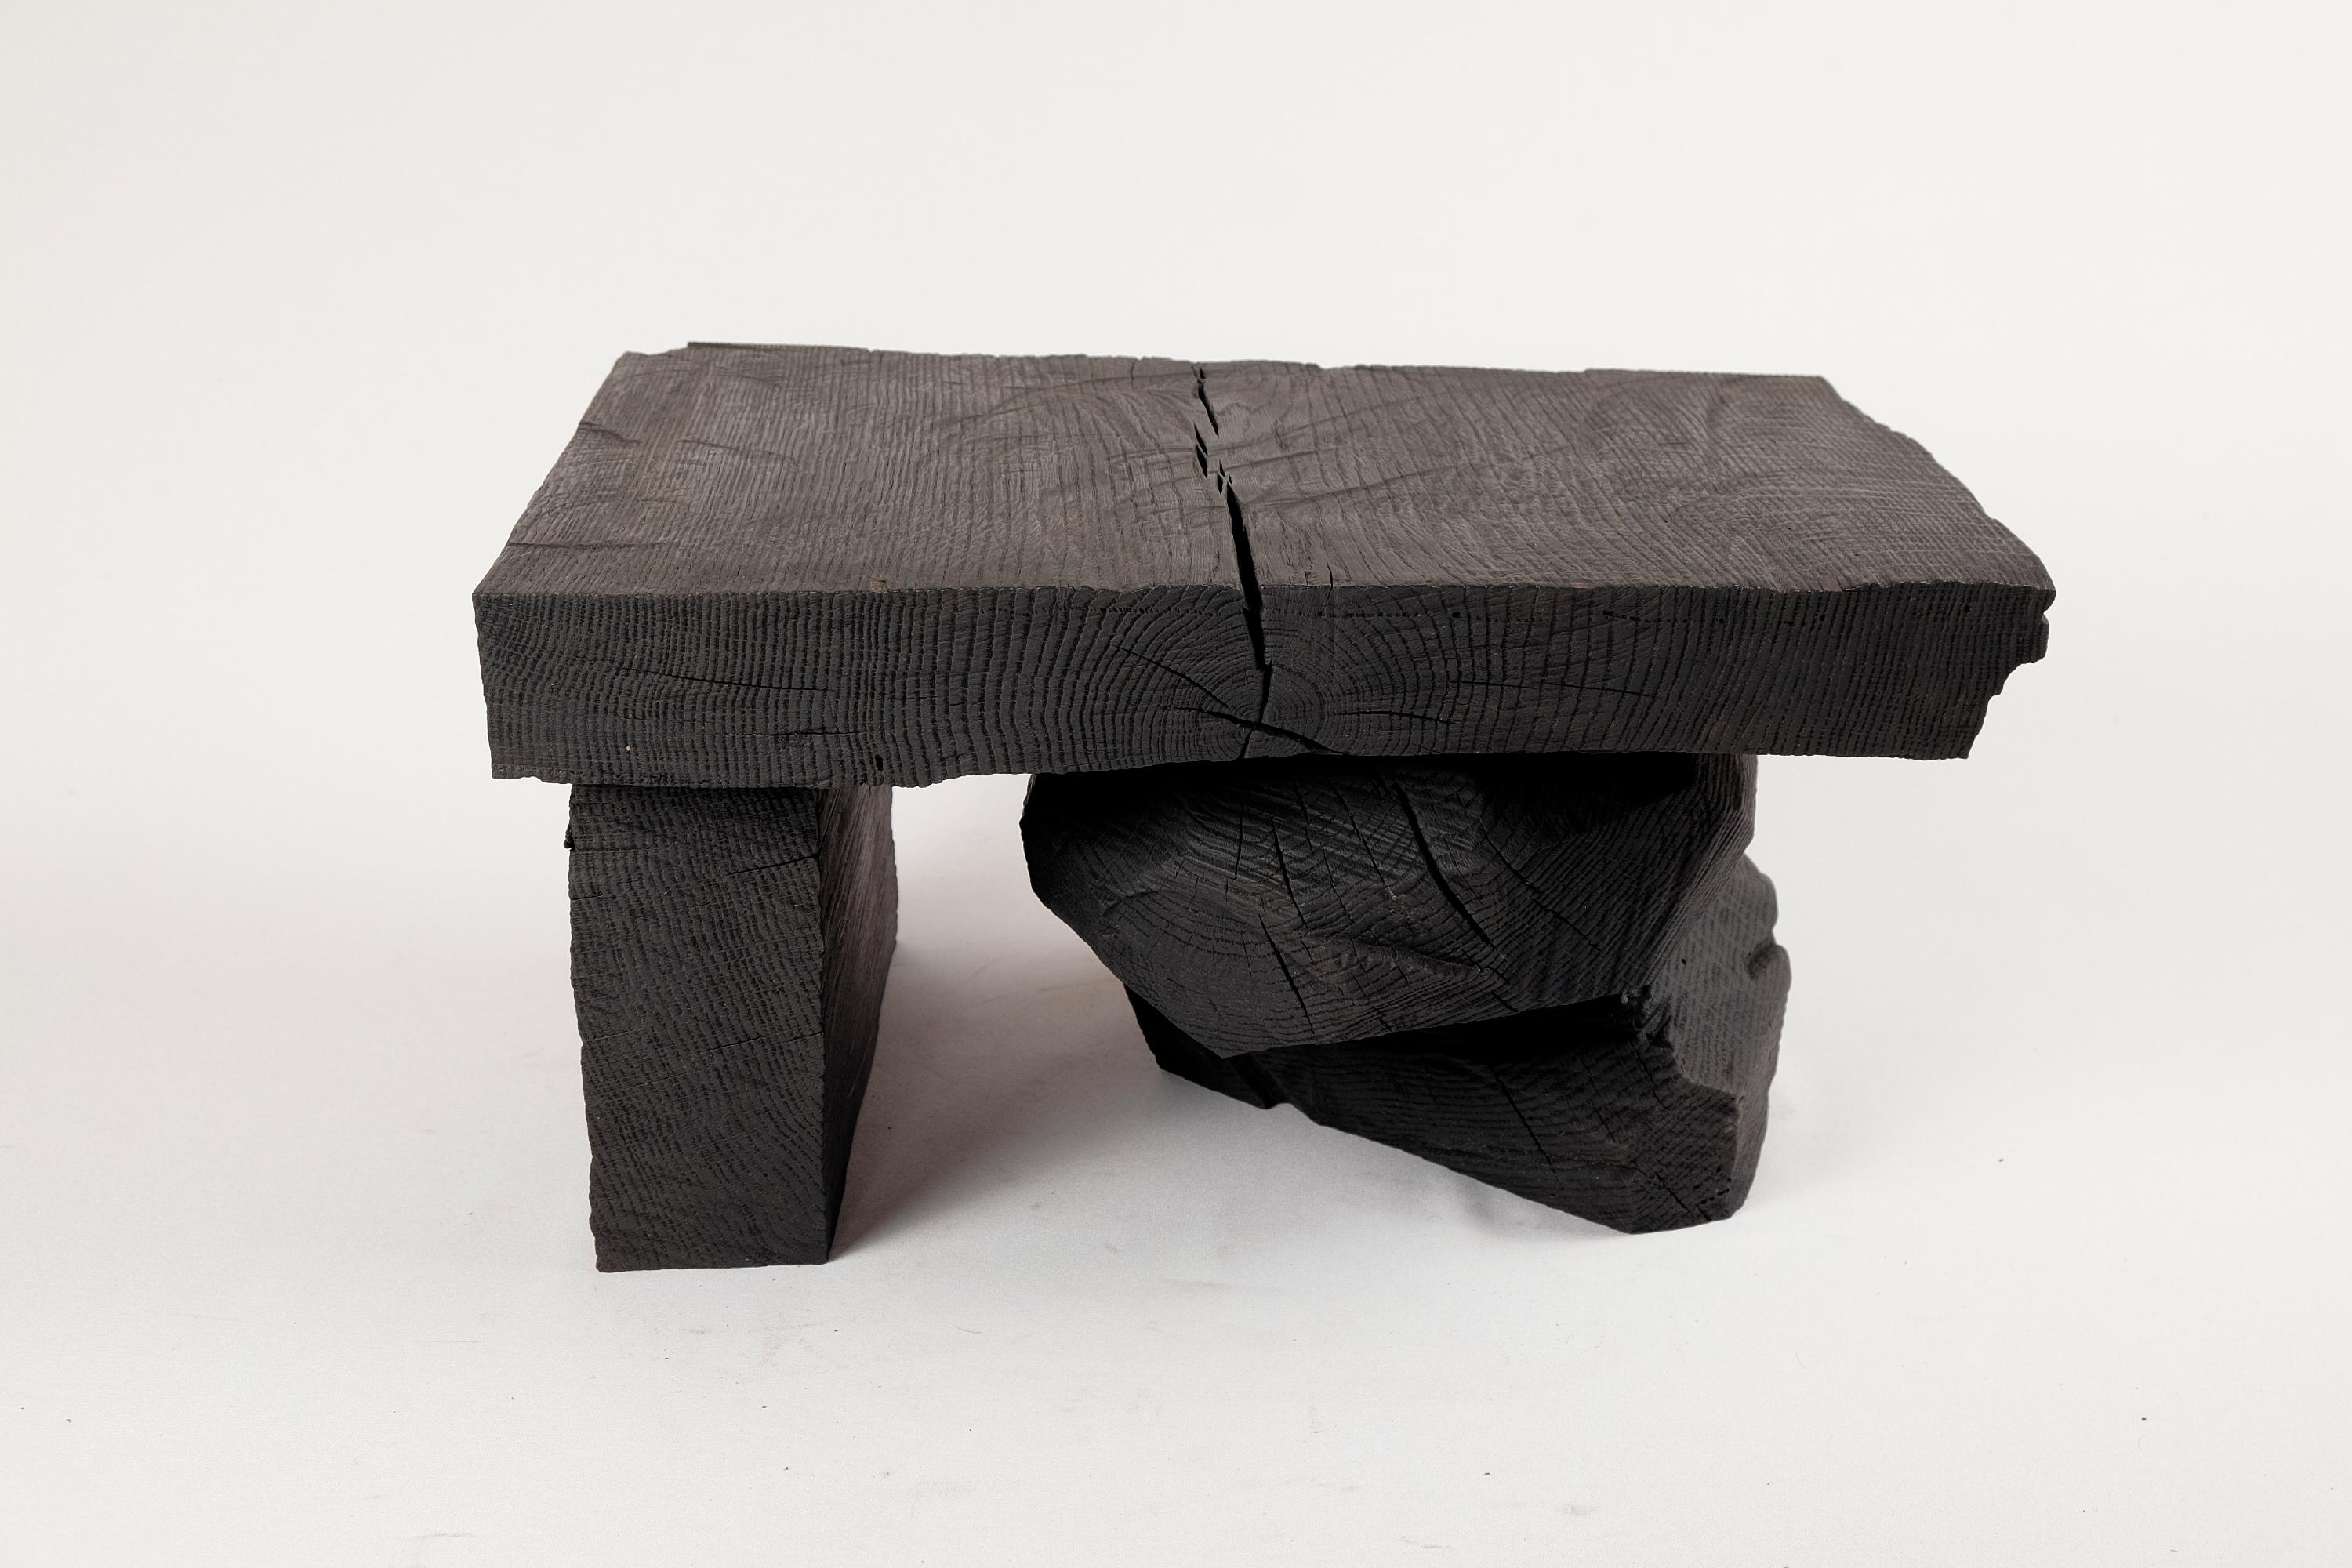 Massives verbranntes Holz, Skulpturaler Beistelltisch, Original Contemporary Design, Logniture (Rustikal) im Angebot